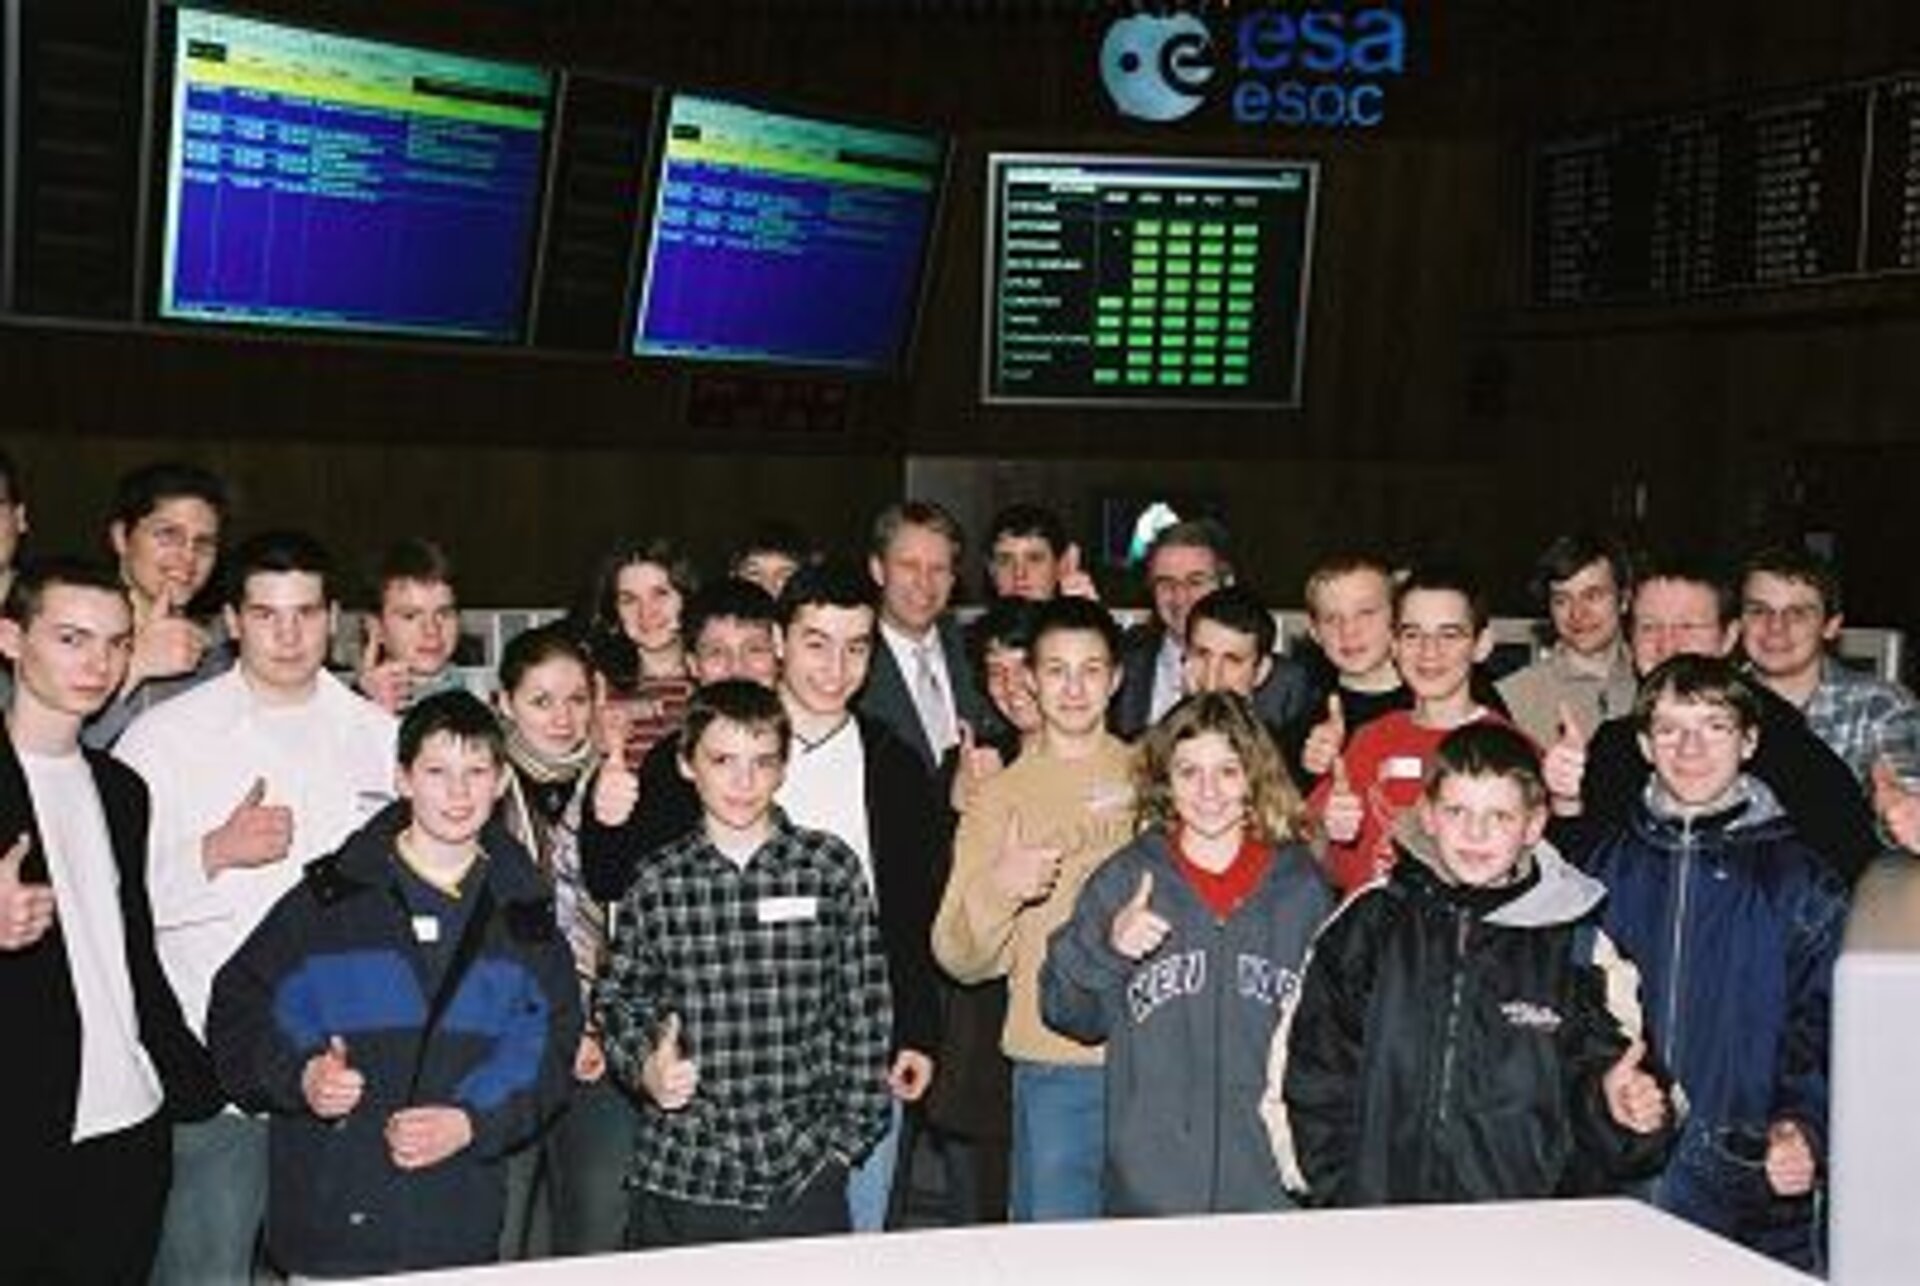 Jugend forscht Teilnehmer im ESOC Kontrollraum